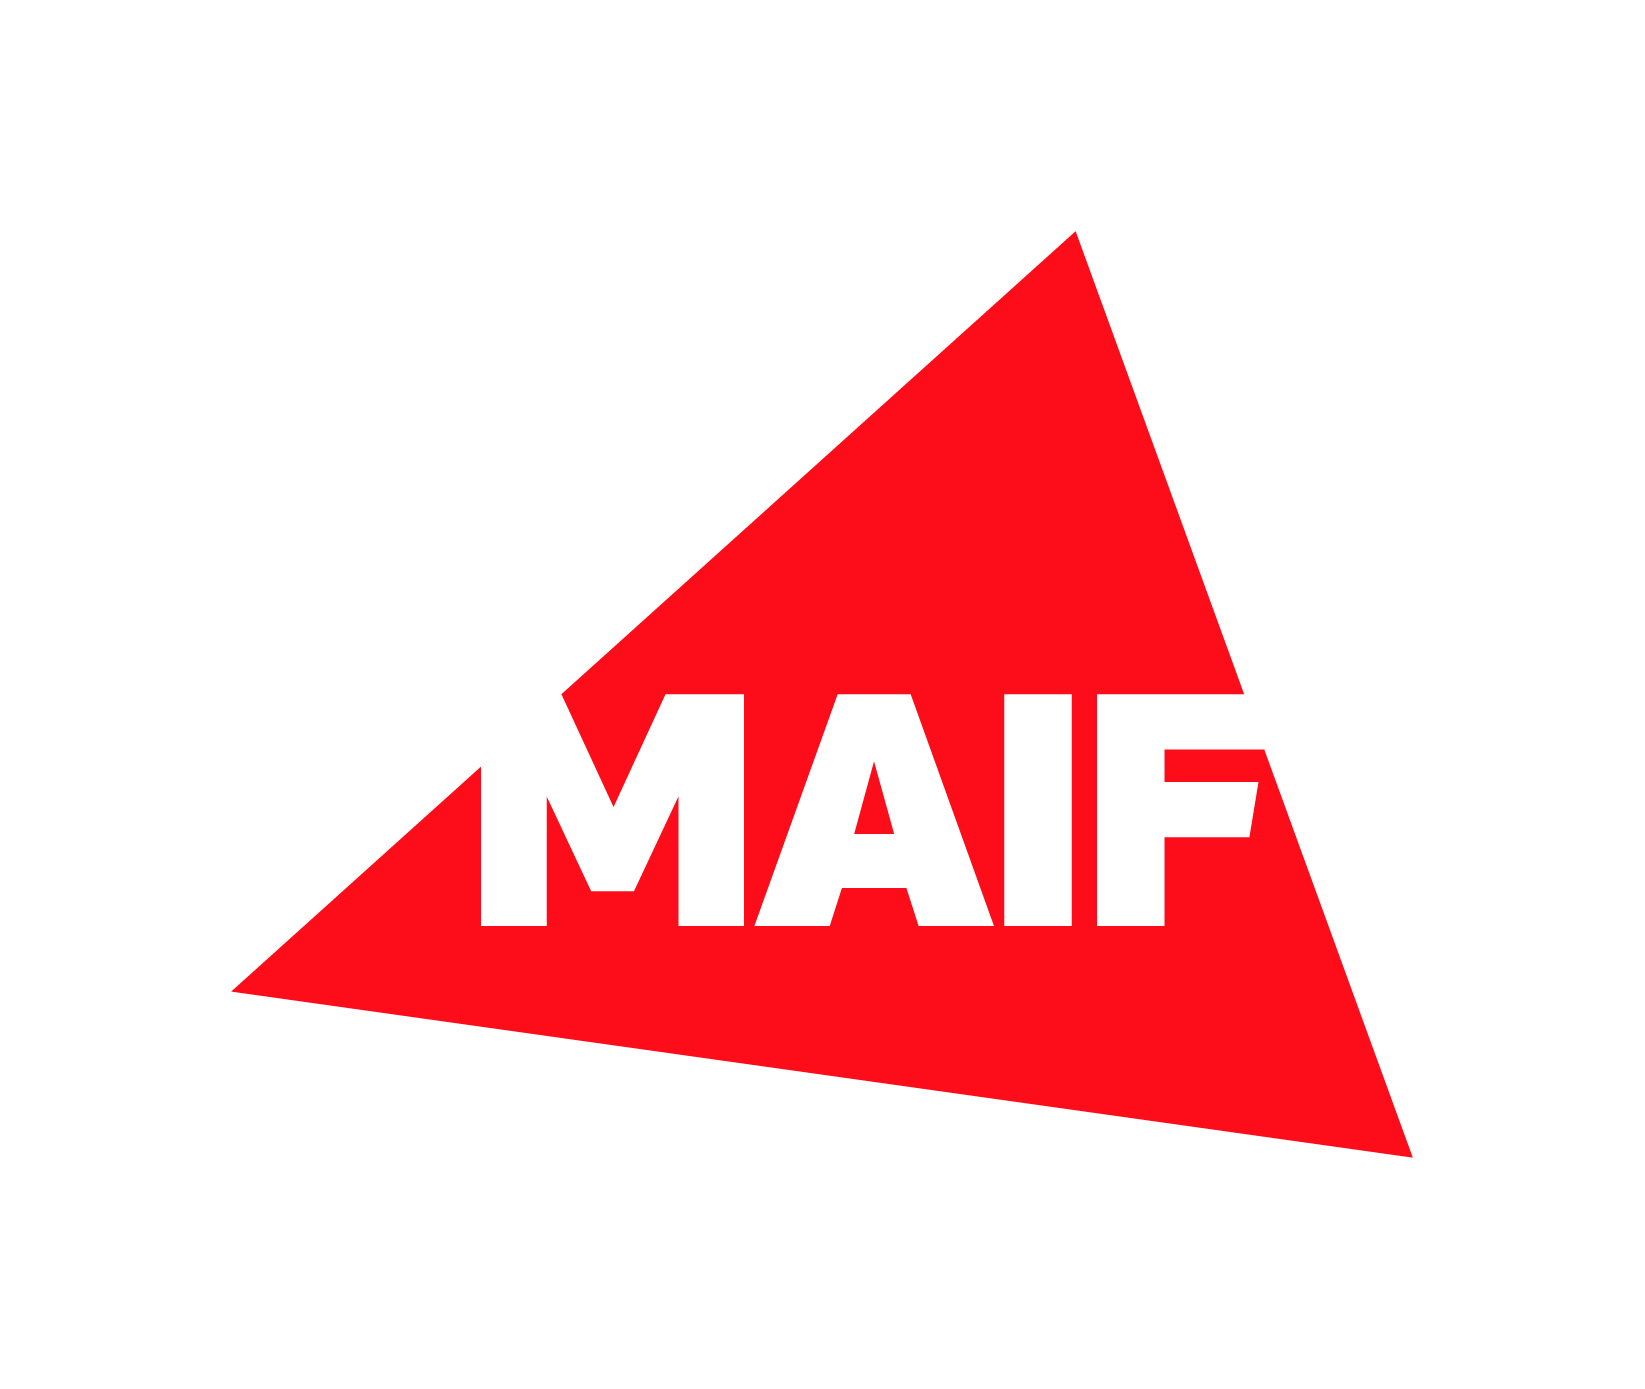 l01t00-RVB-logo-MAIF-preconise